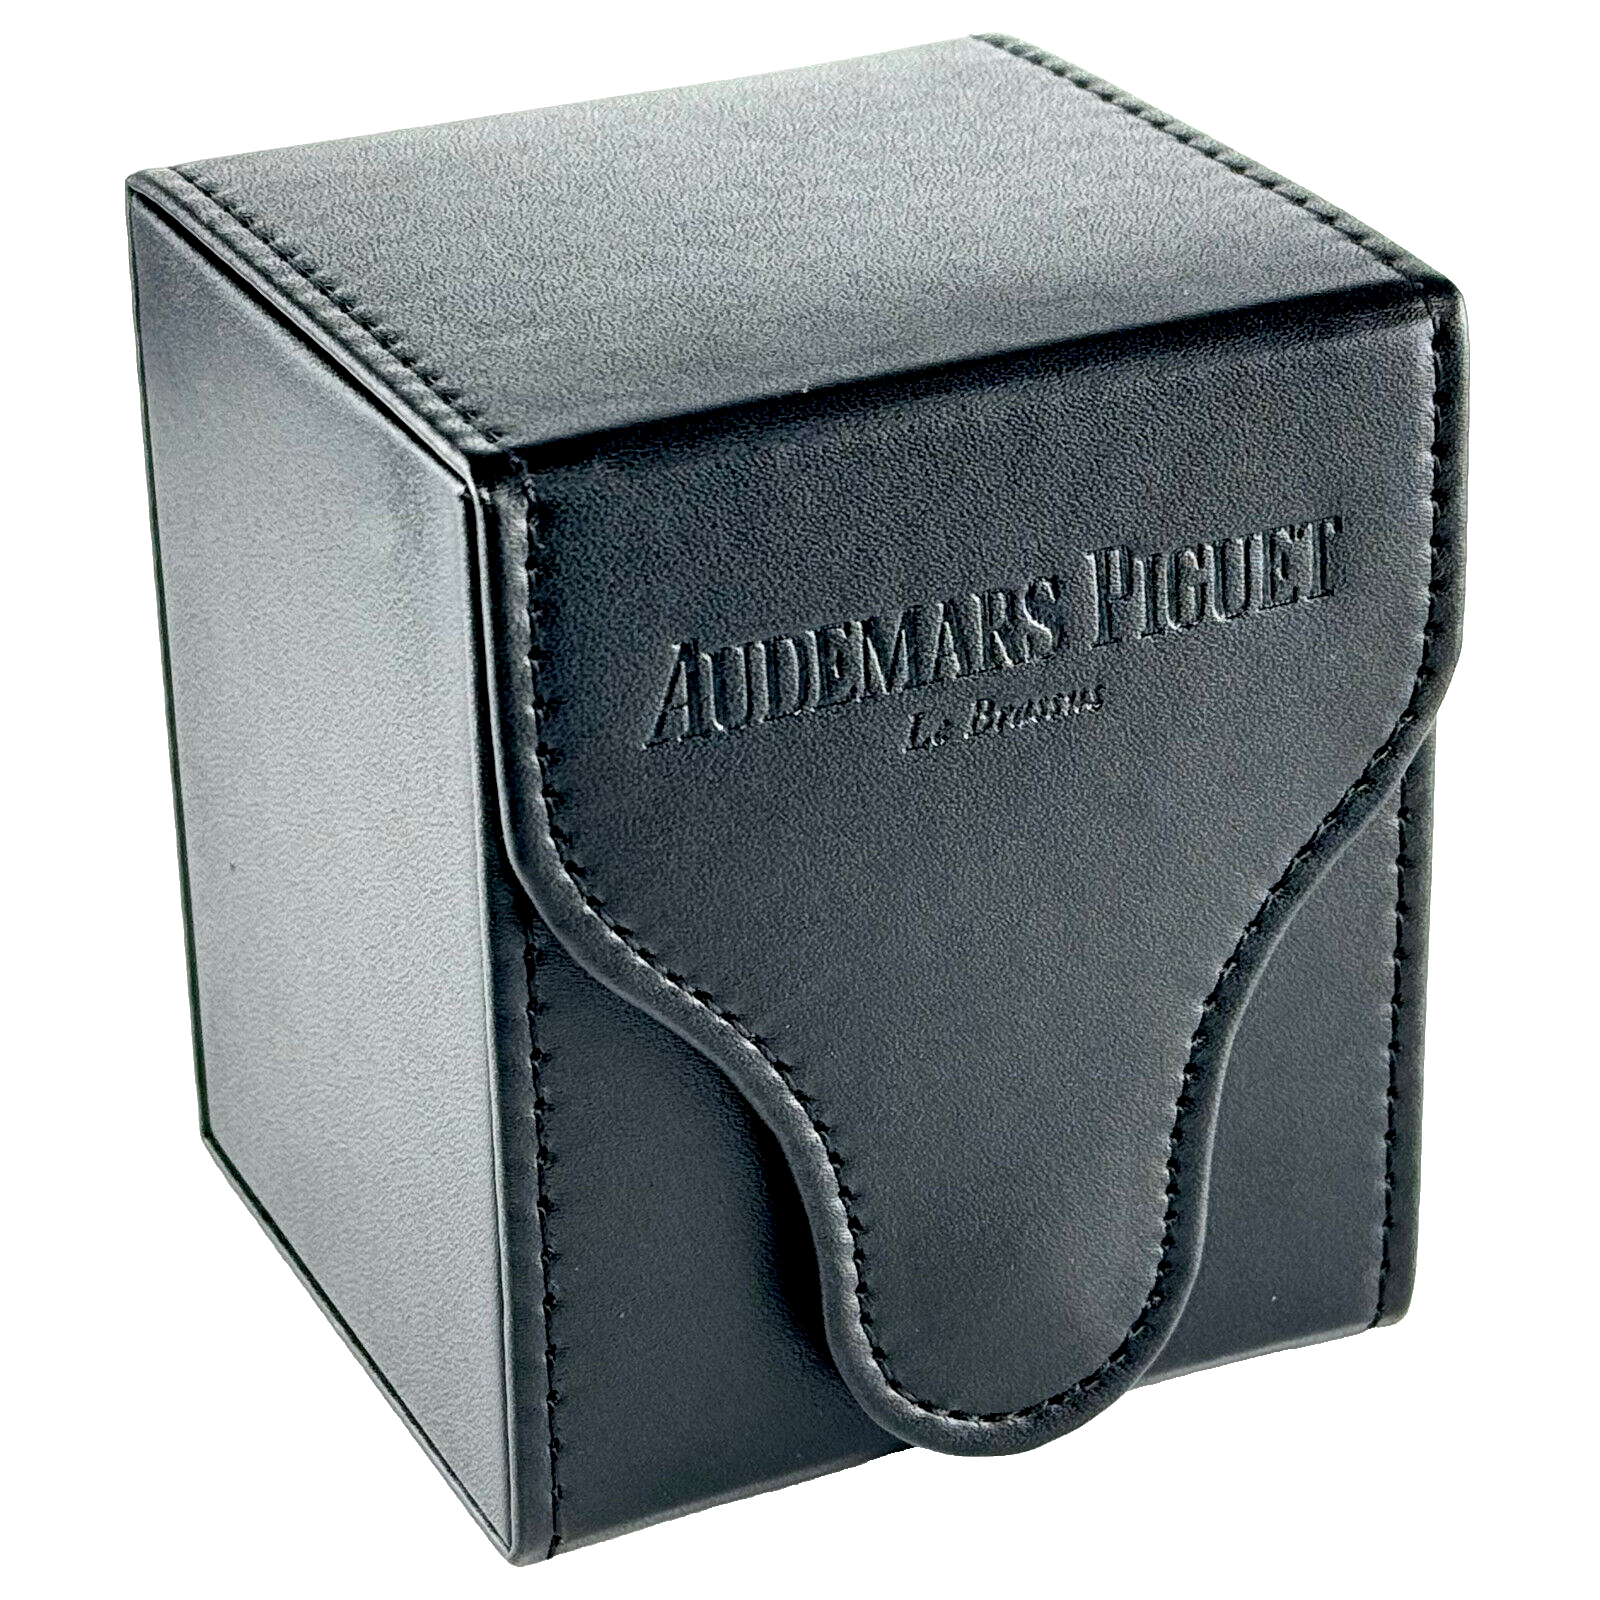 Audemars Piguet AP Travel Case Pouch Etui Reiseetui Reisebox Uhrenetui Schwarz Black Leder Leather watch case